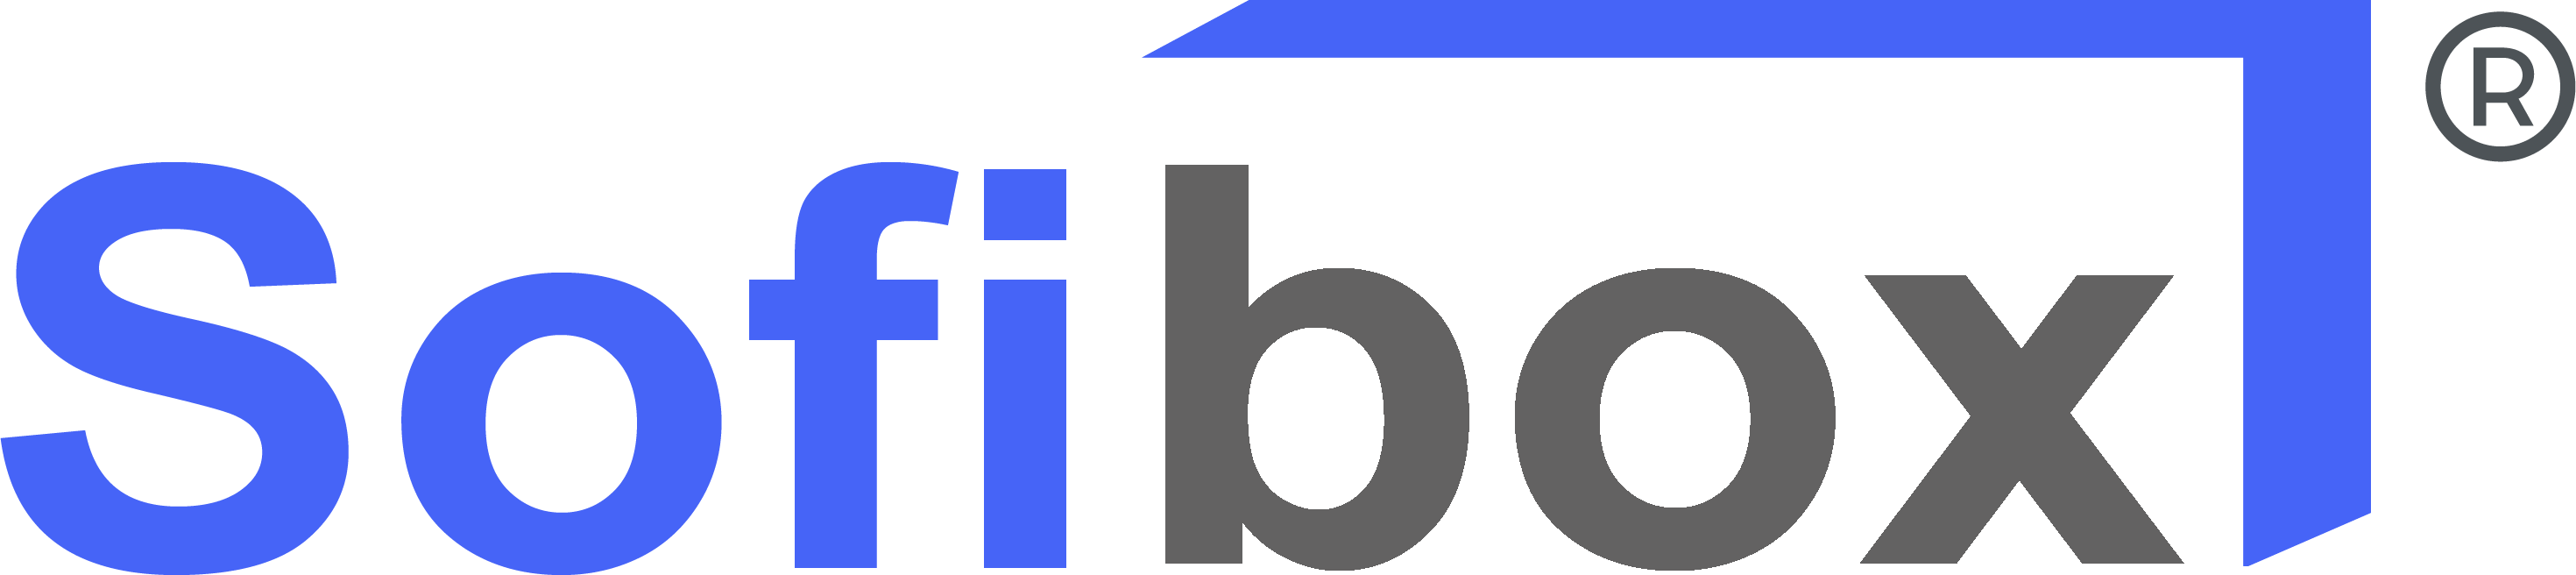 Sofibox logo